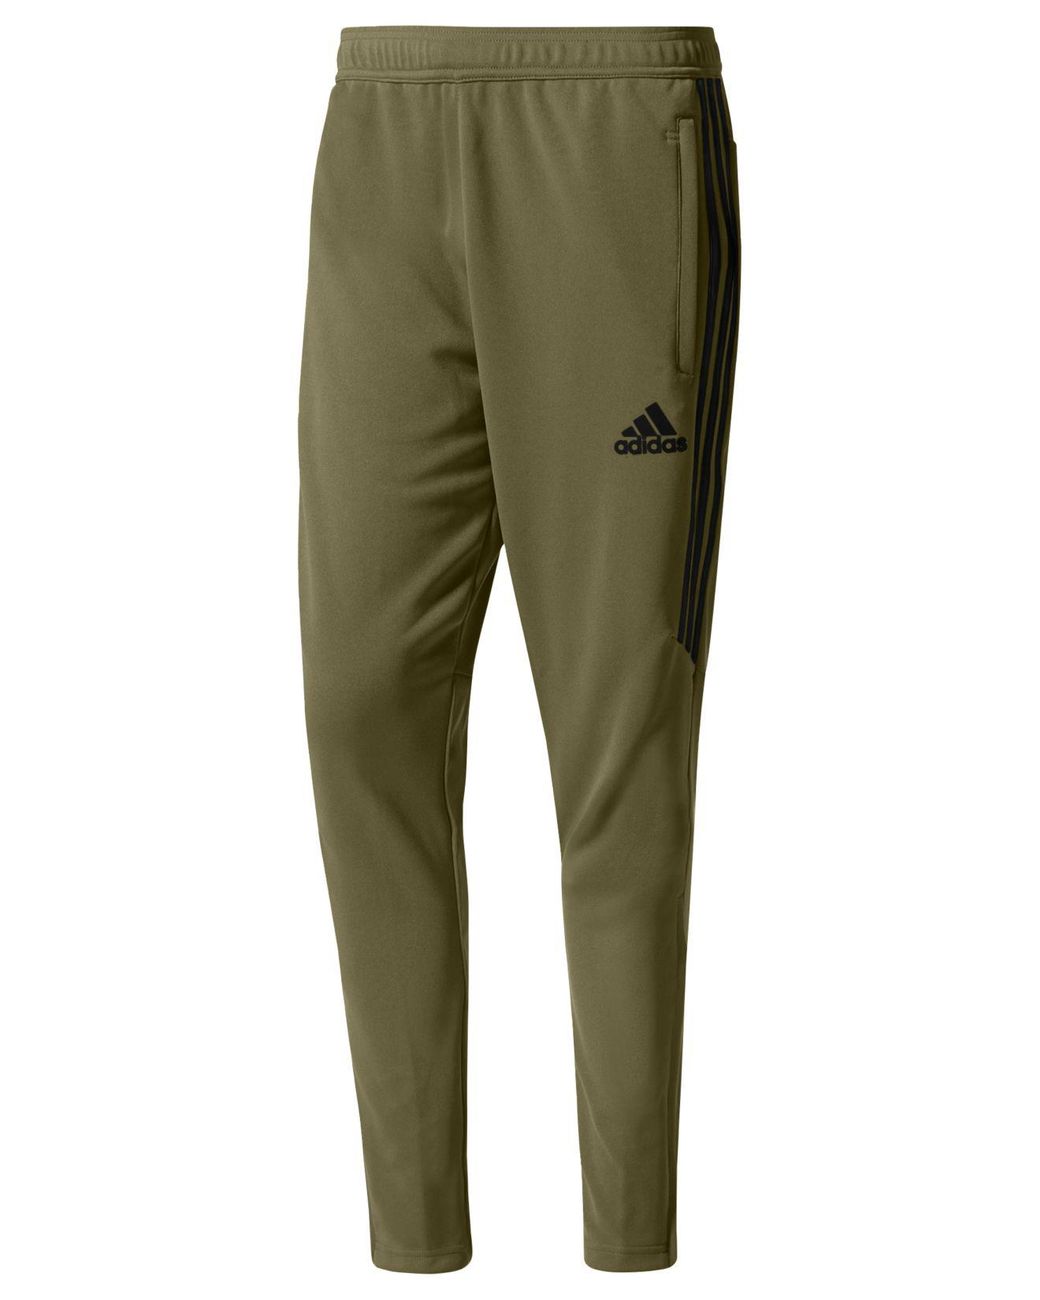 adidas Men's Climacool Soccer Pants in Green for Men